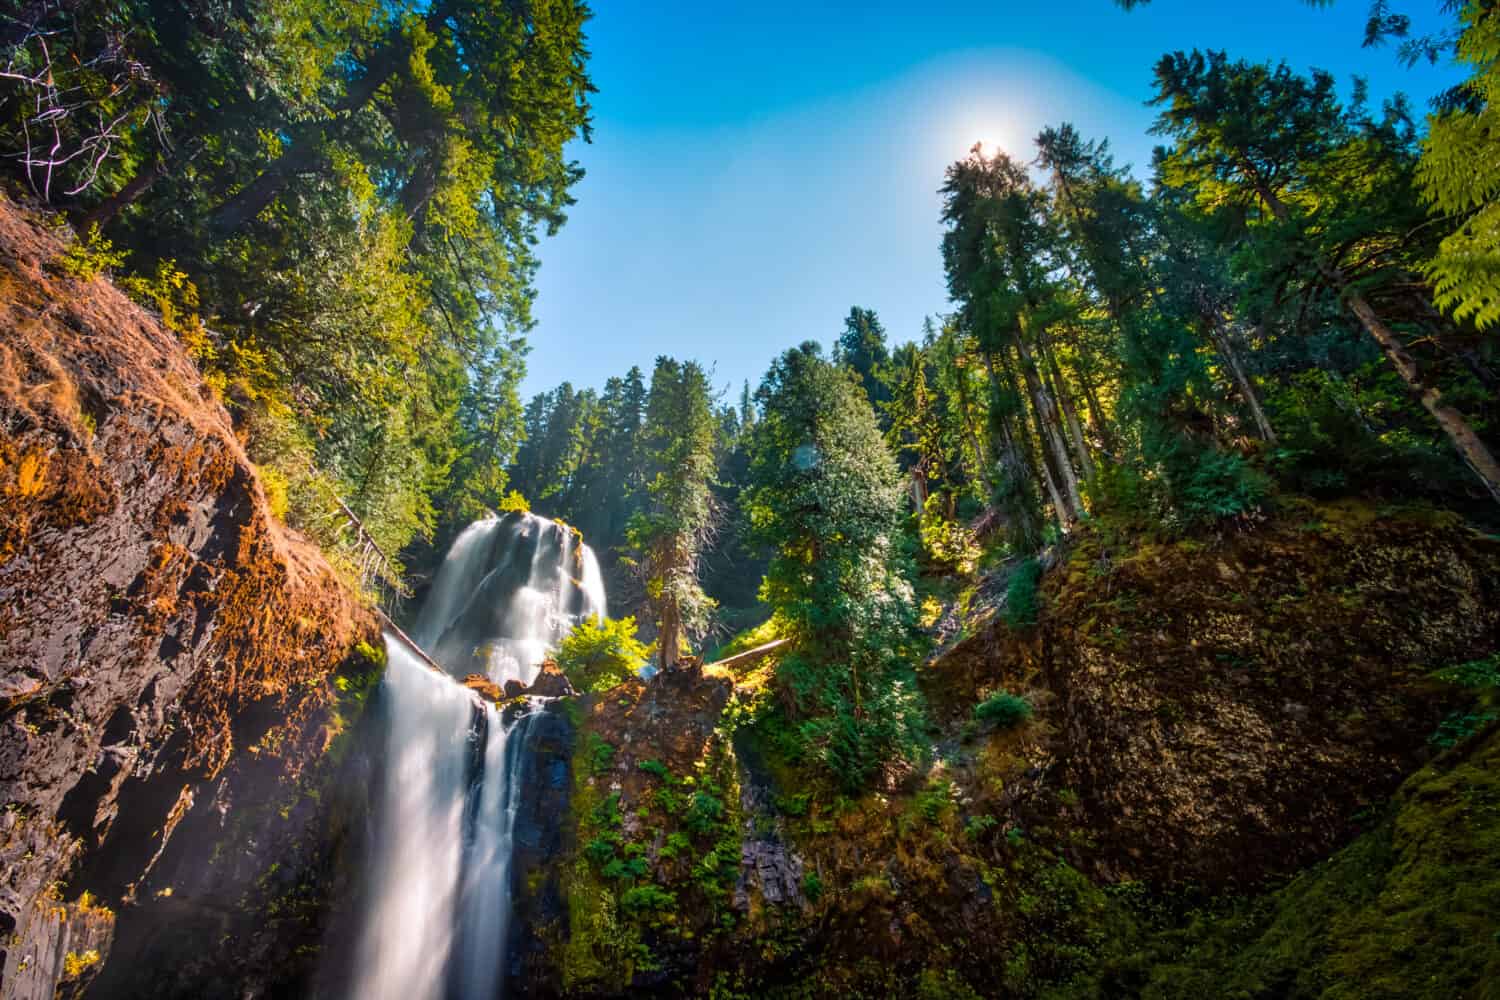 Falls Creek Falls in Gifford Pinchot National Forest, Washington